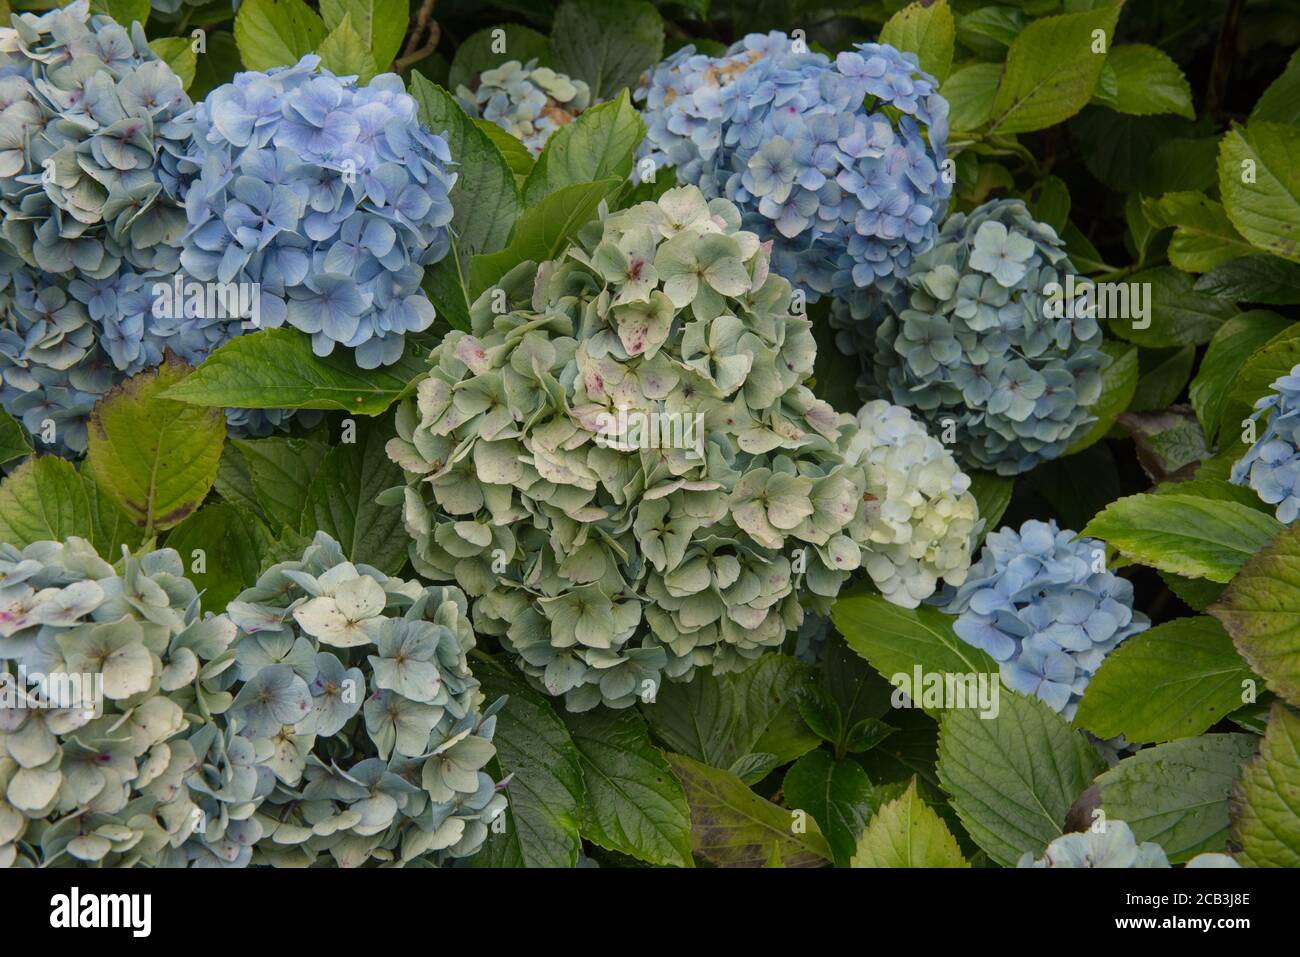 Background or Texture of Summer Flowering Blue Mophead Hydrangea (Hydrangea macrophylla 'Mousseline') in a Woodland Garden in Rural Devon, England, UK Stock Photo